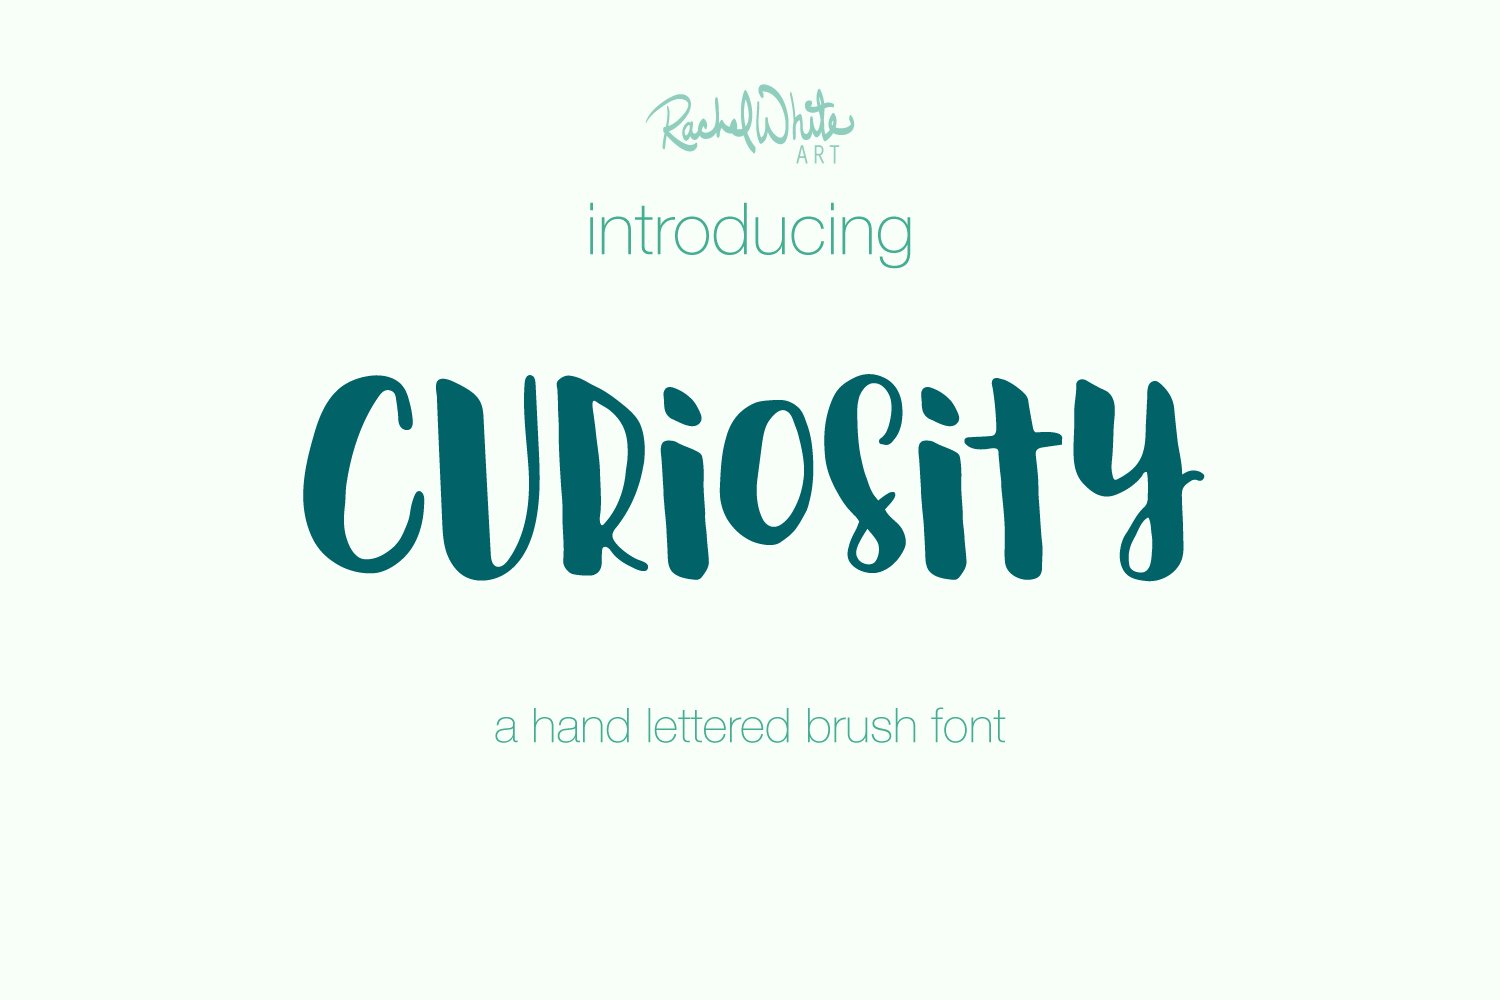 Curiosity, hand lettered brush font cover image.